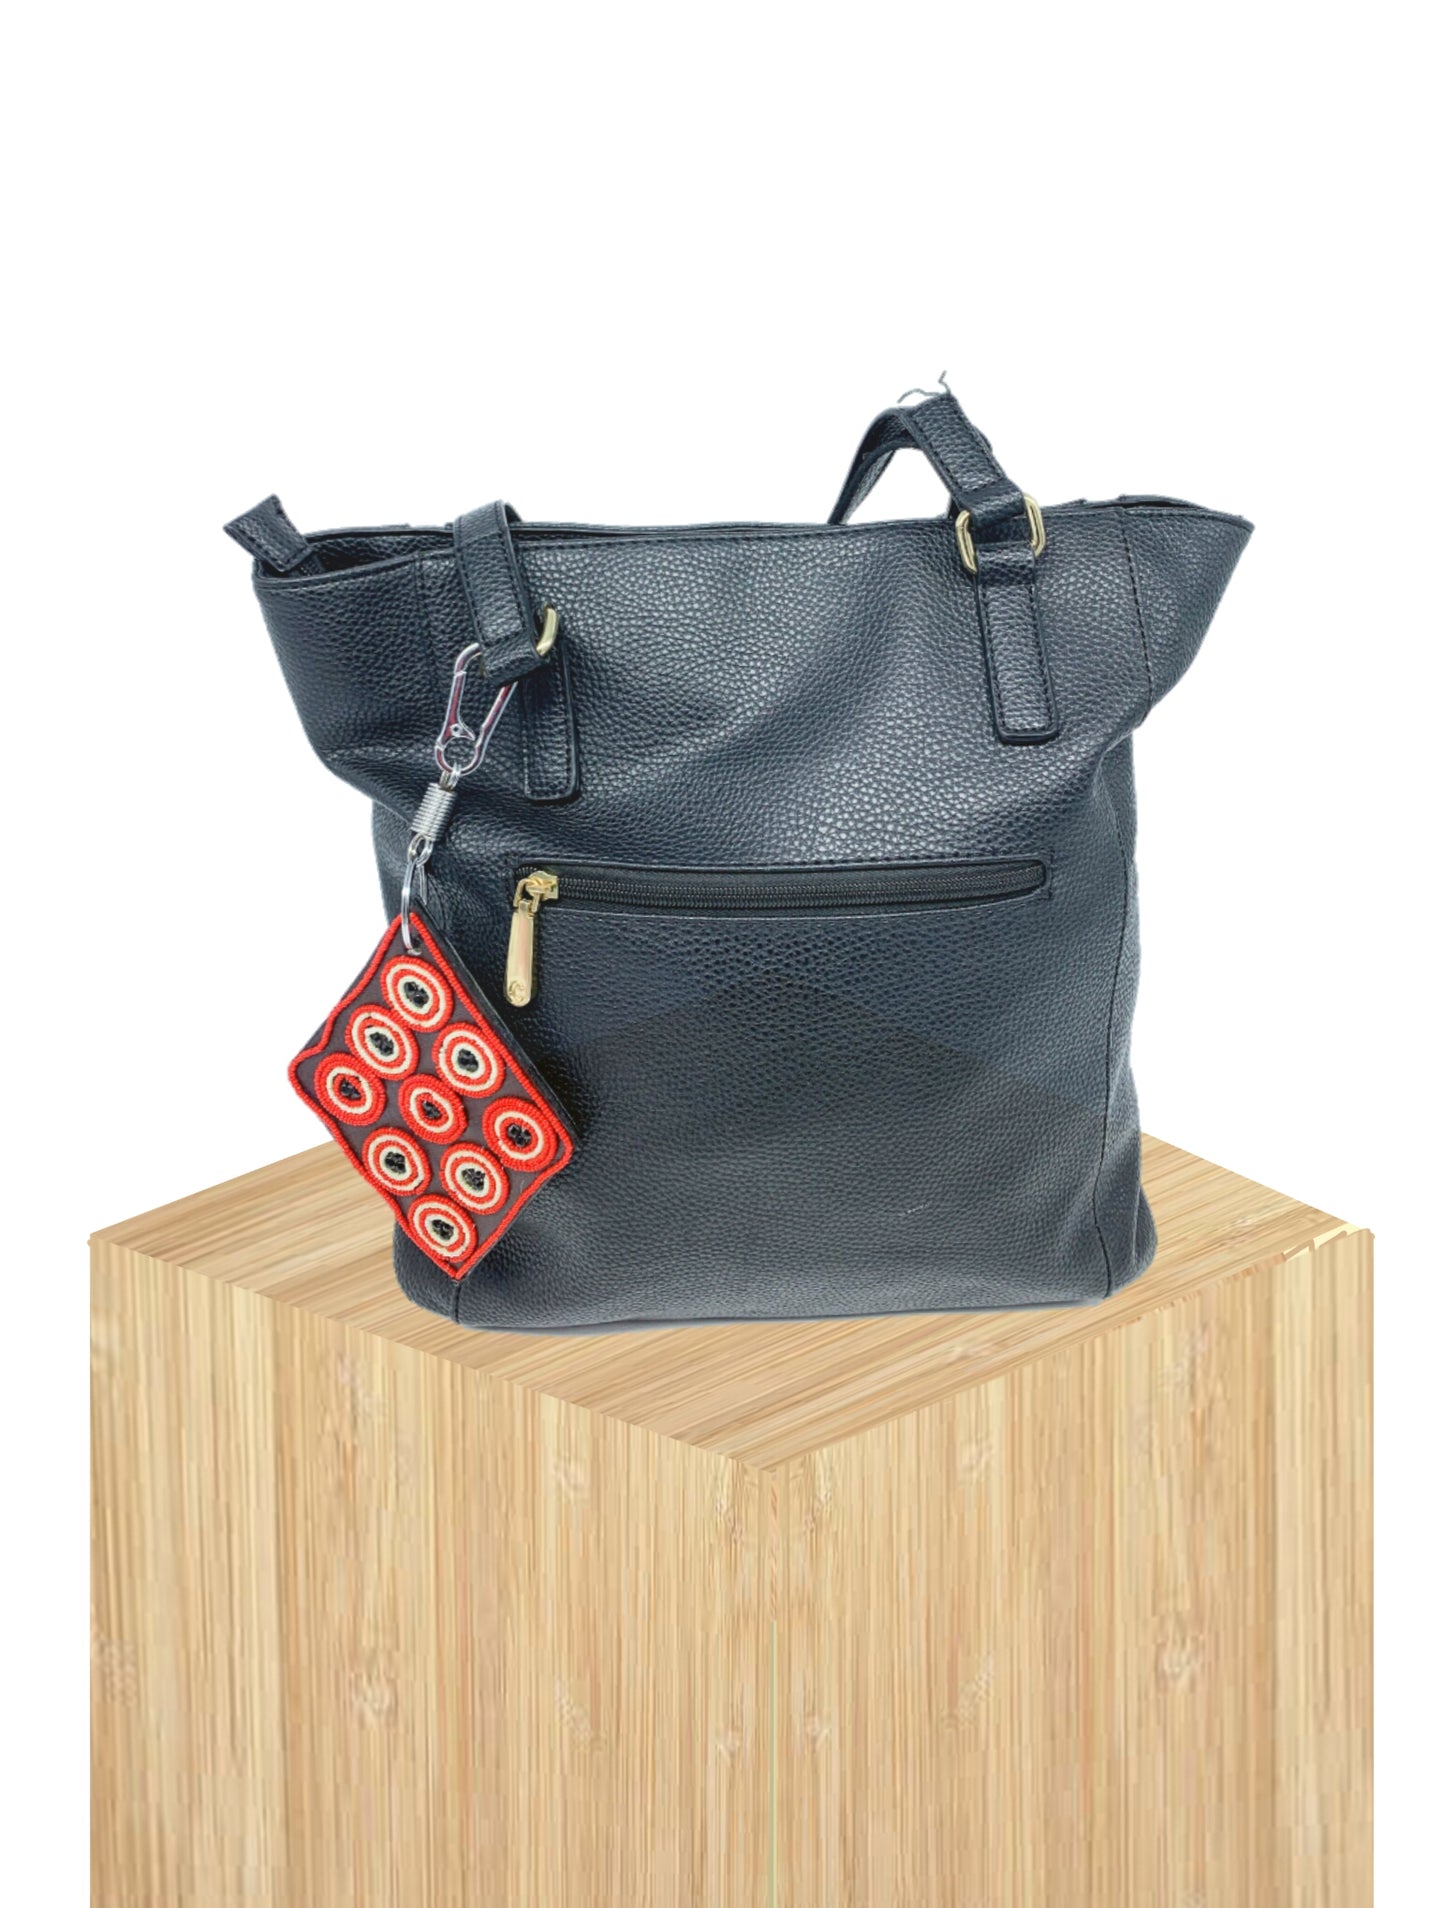 Handbag Charm, handbag Accessories/ Key Chain/ Leather/ Beaded/ Handmade